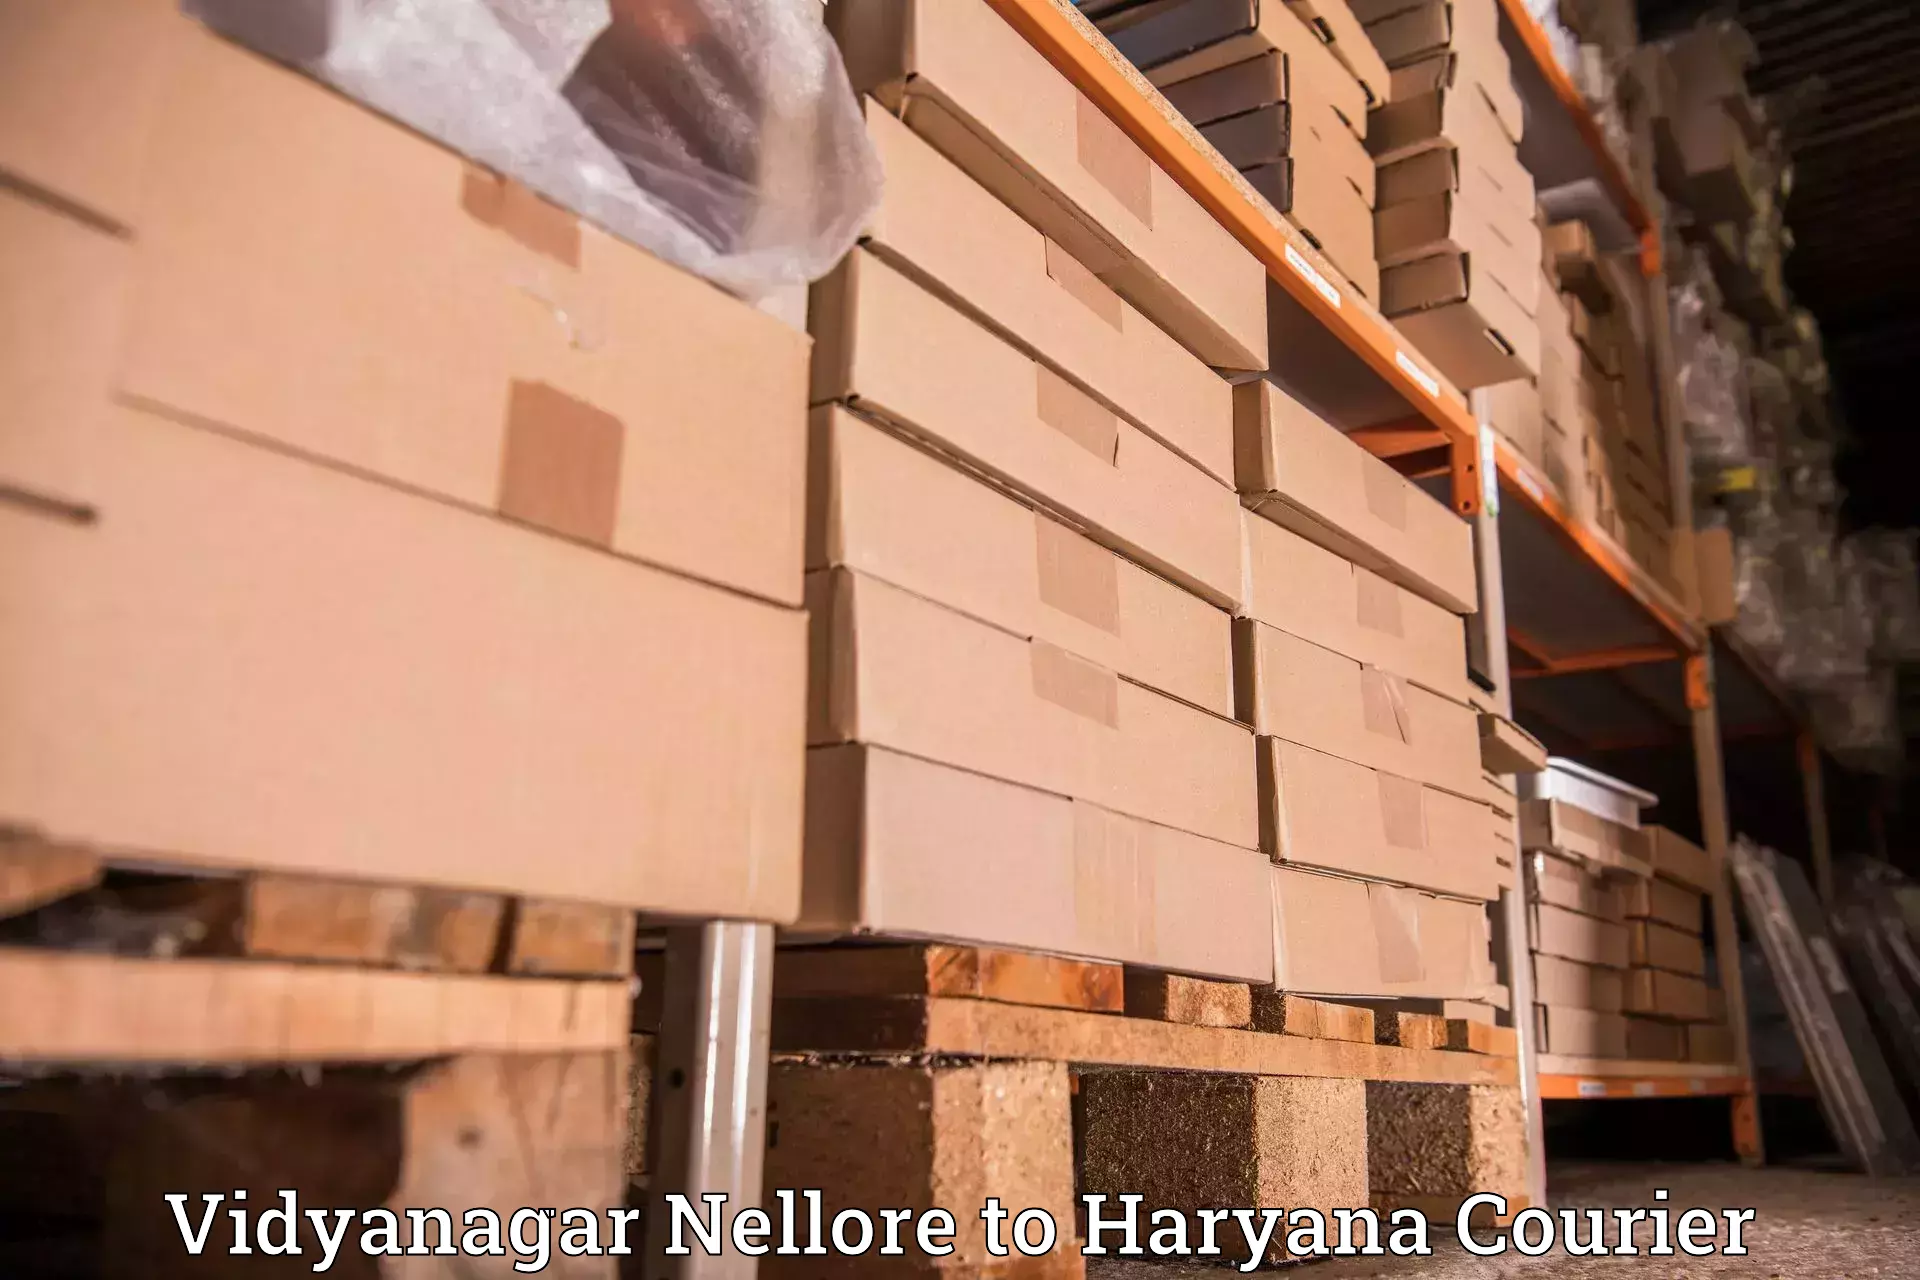 User-friendly delivery service Vidyanagar Nellore to Hansi